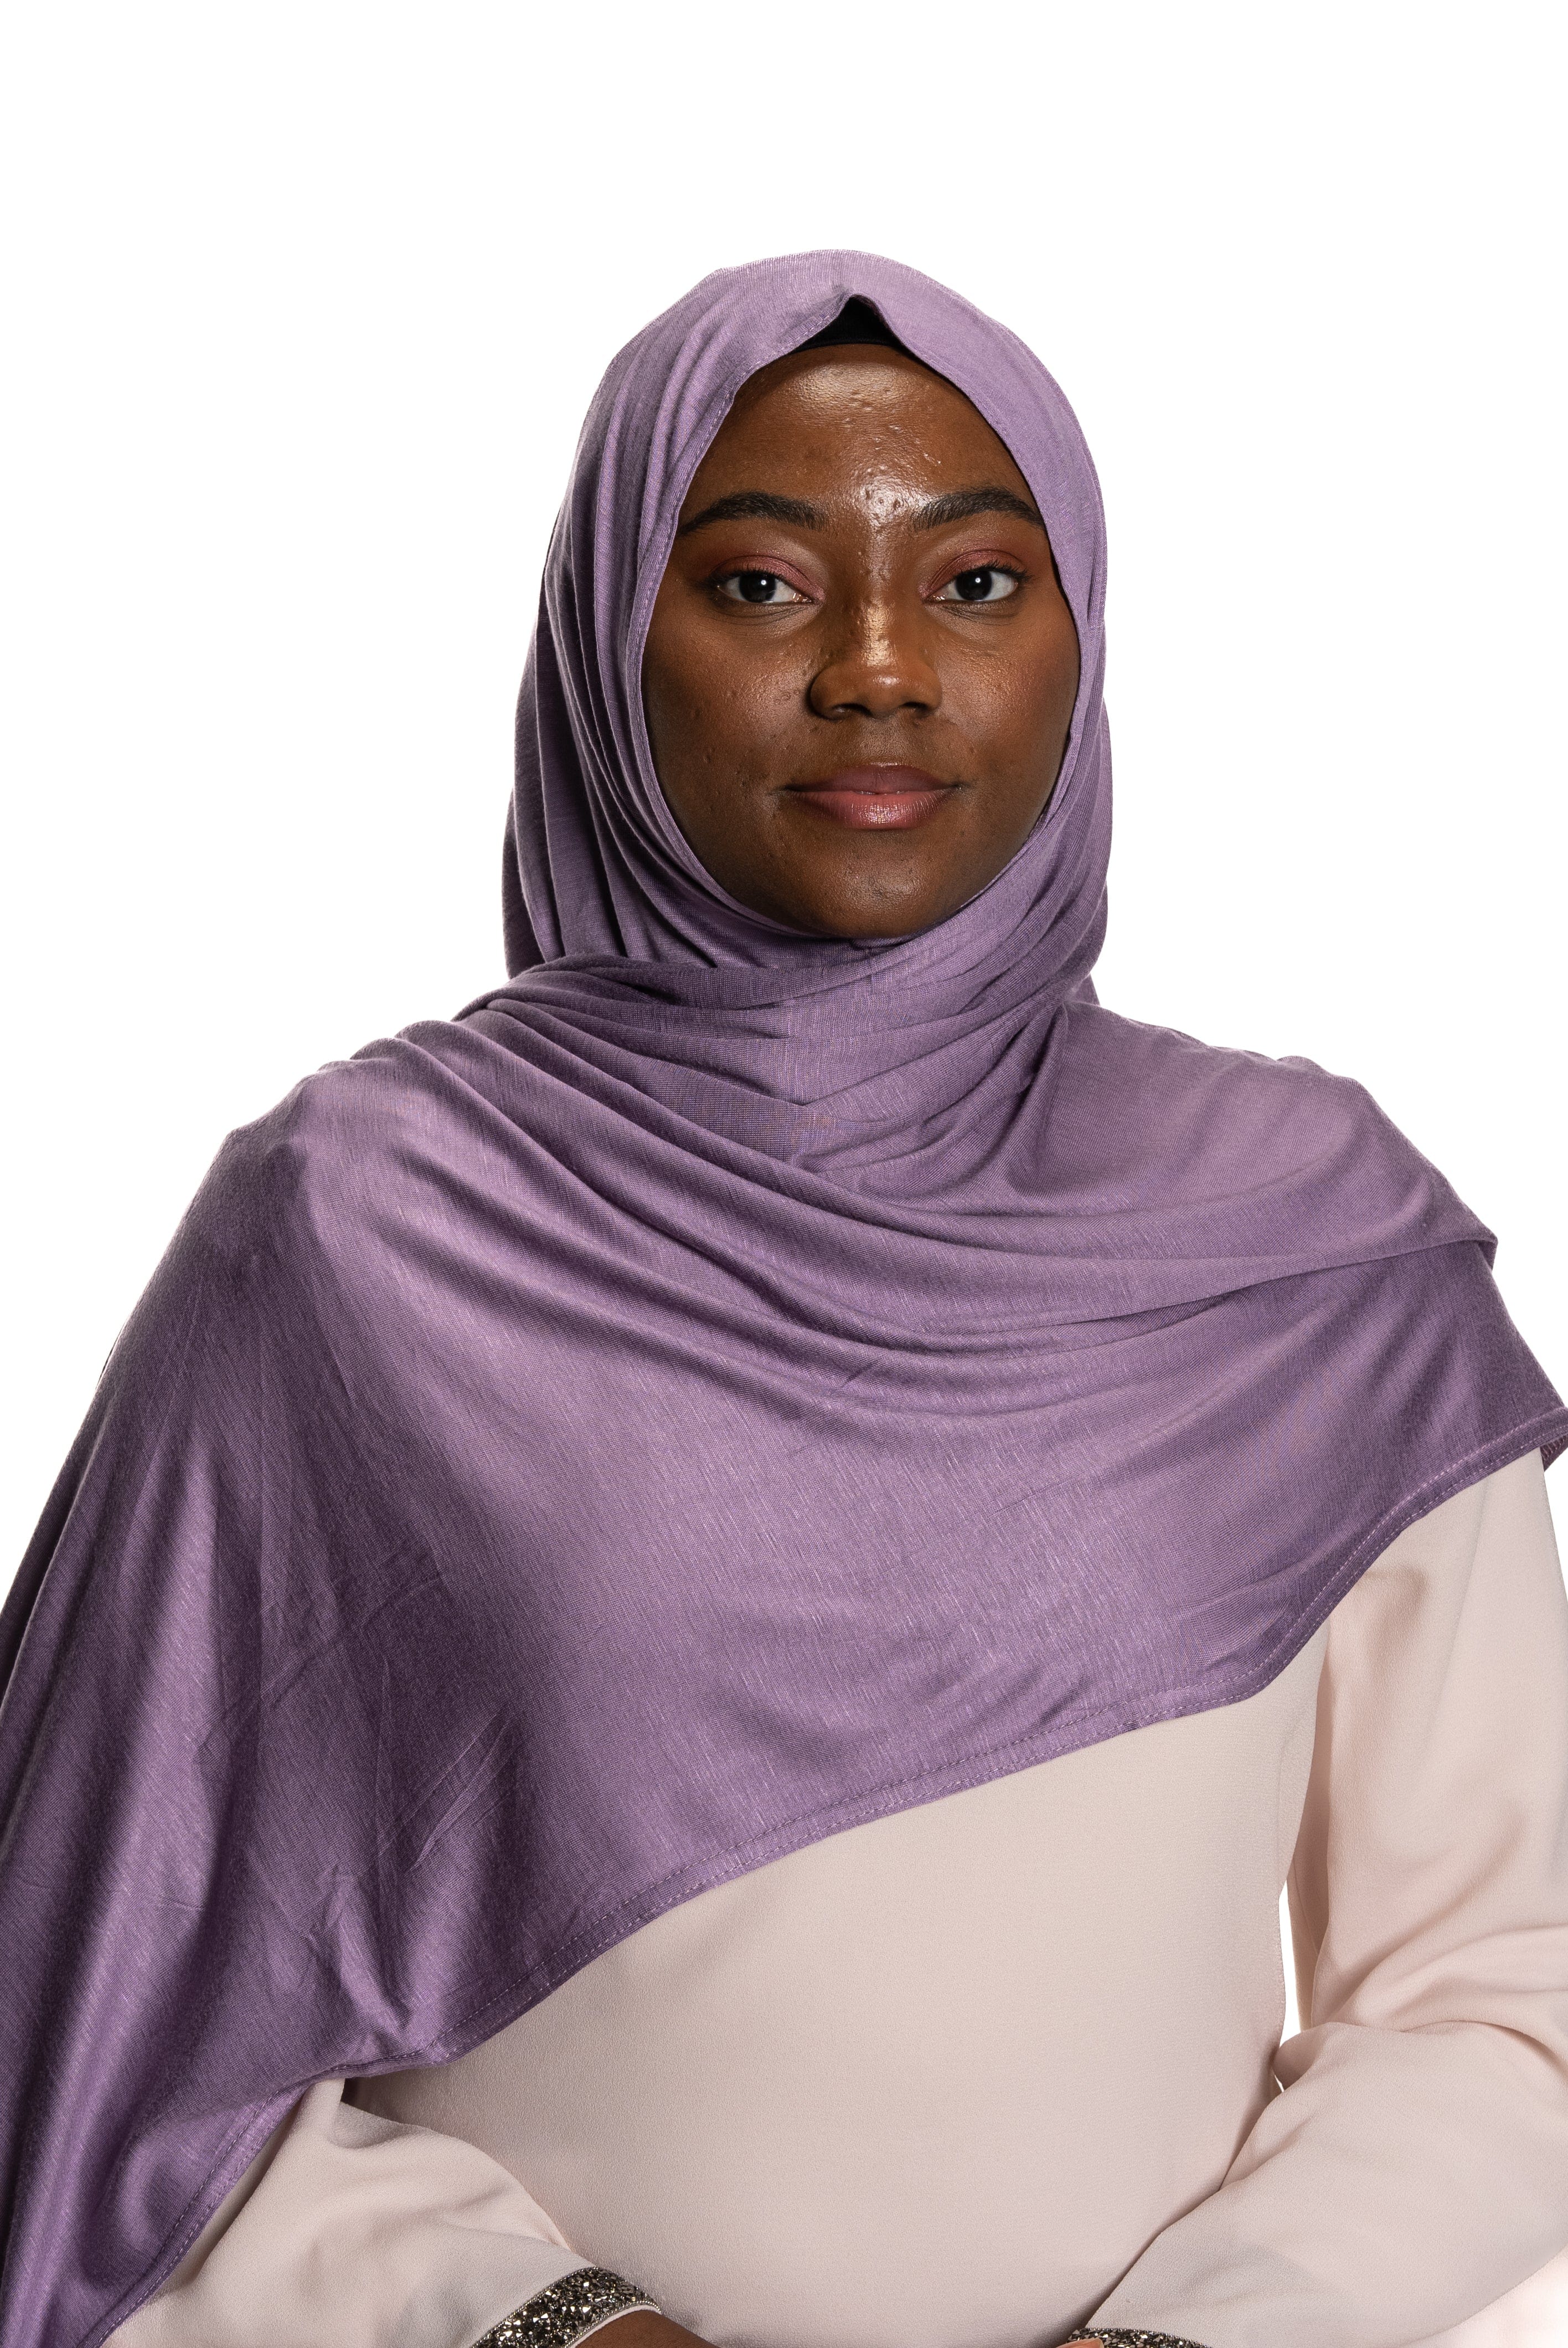 Jolie Nisa Hijab Violet Premium Slip-on Jersey Instant Head Scarf Wrap for Effortless and Stylish Hijab Wear Premium Slip-on instant Jersey Head Scarf Wrap for Effortless and Stylish Hijab Wear!